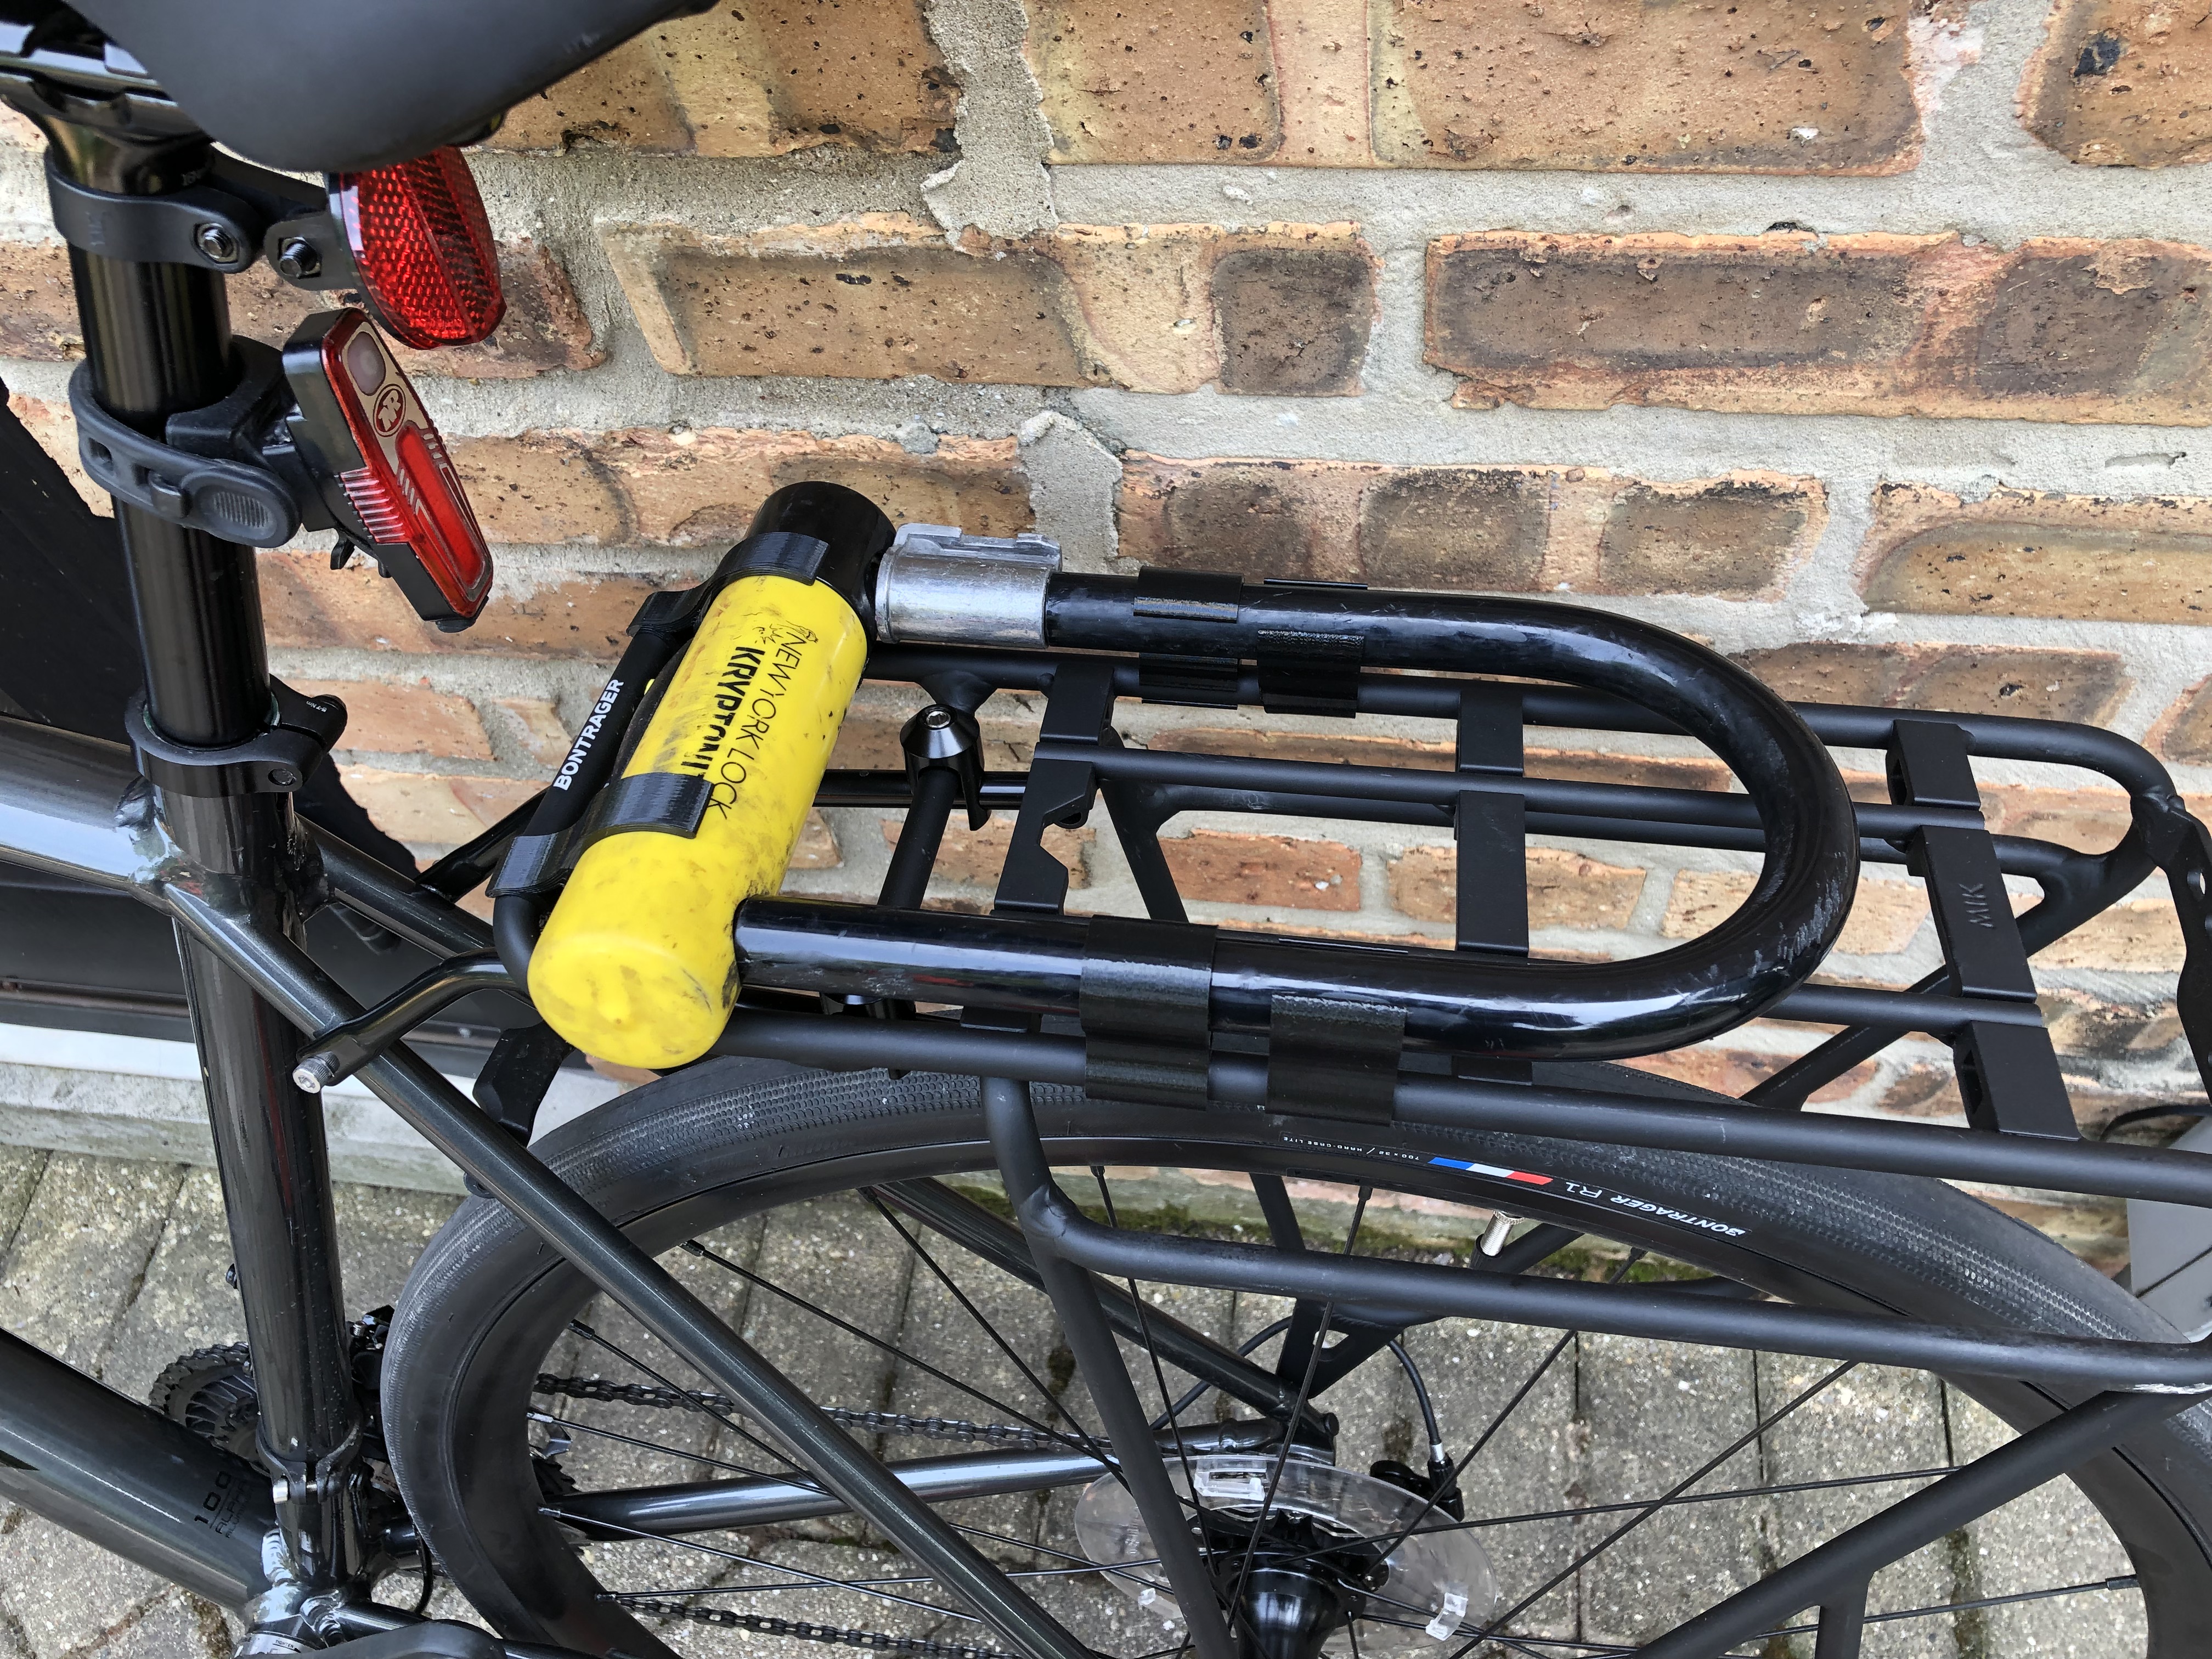 Parameterized U-lock holder for rear bike rack (Bontrager MIK Deluxe rack and Kryptonite New York lock)